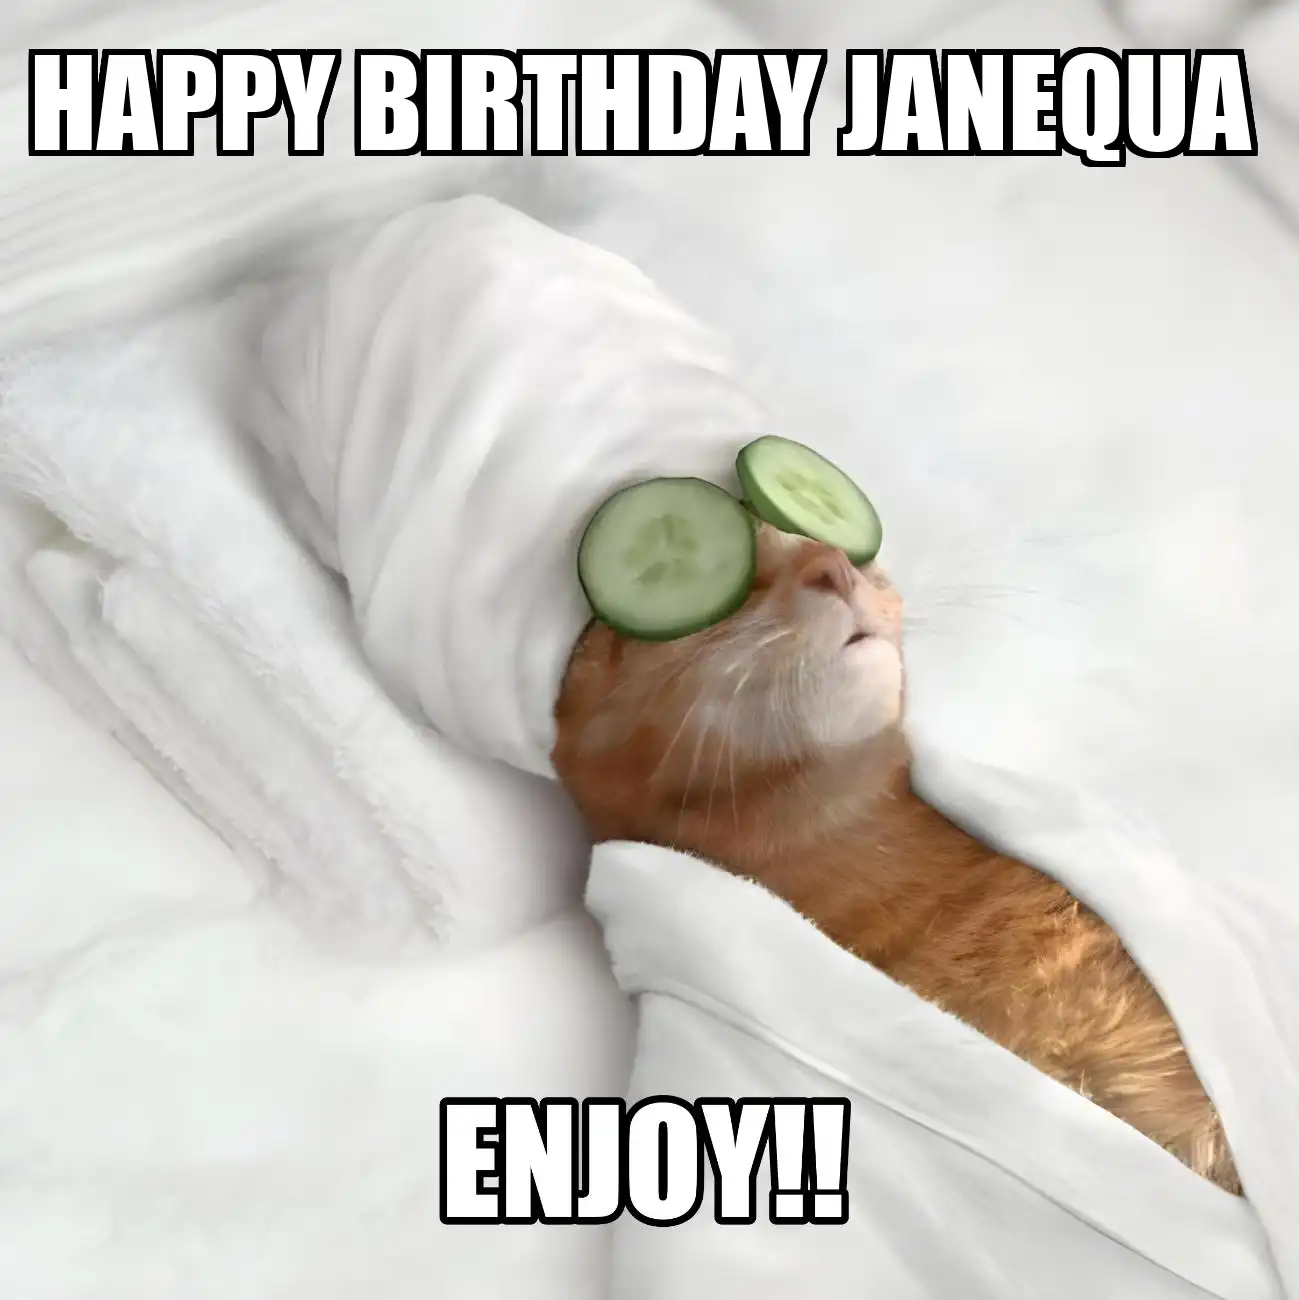 Happy Birthday Janequa Enjoy Cat Meme